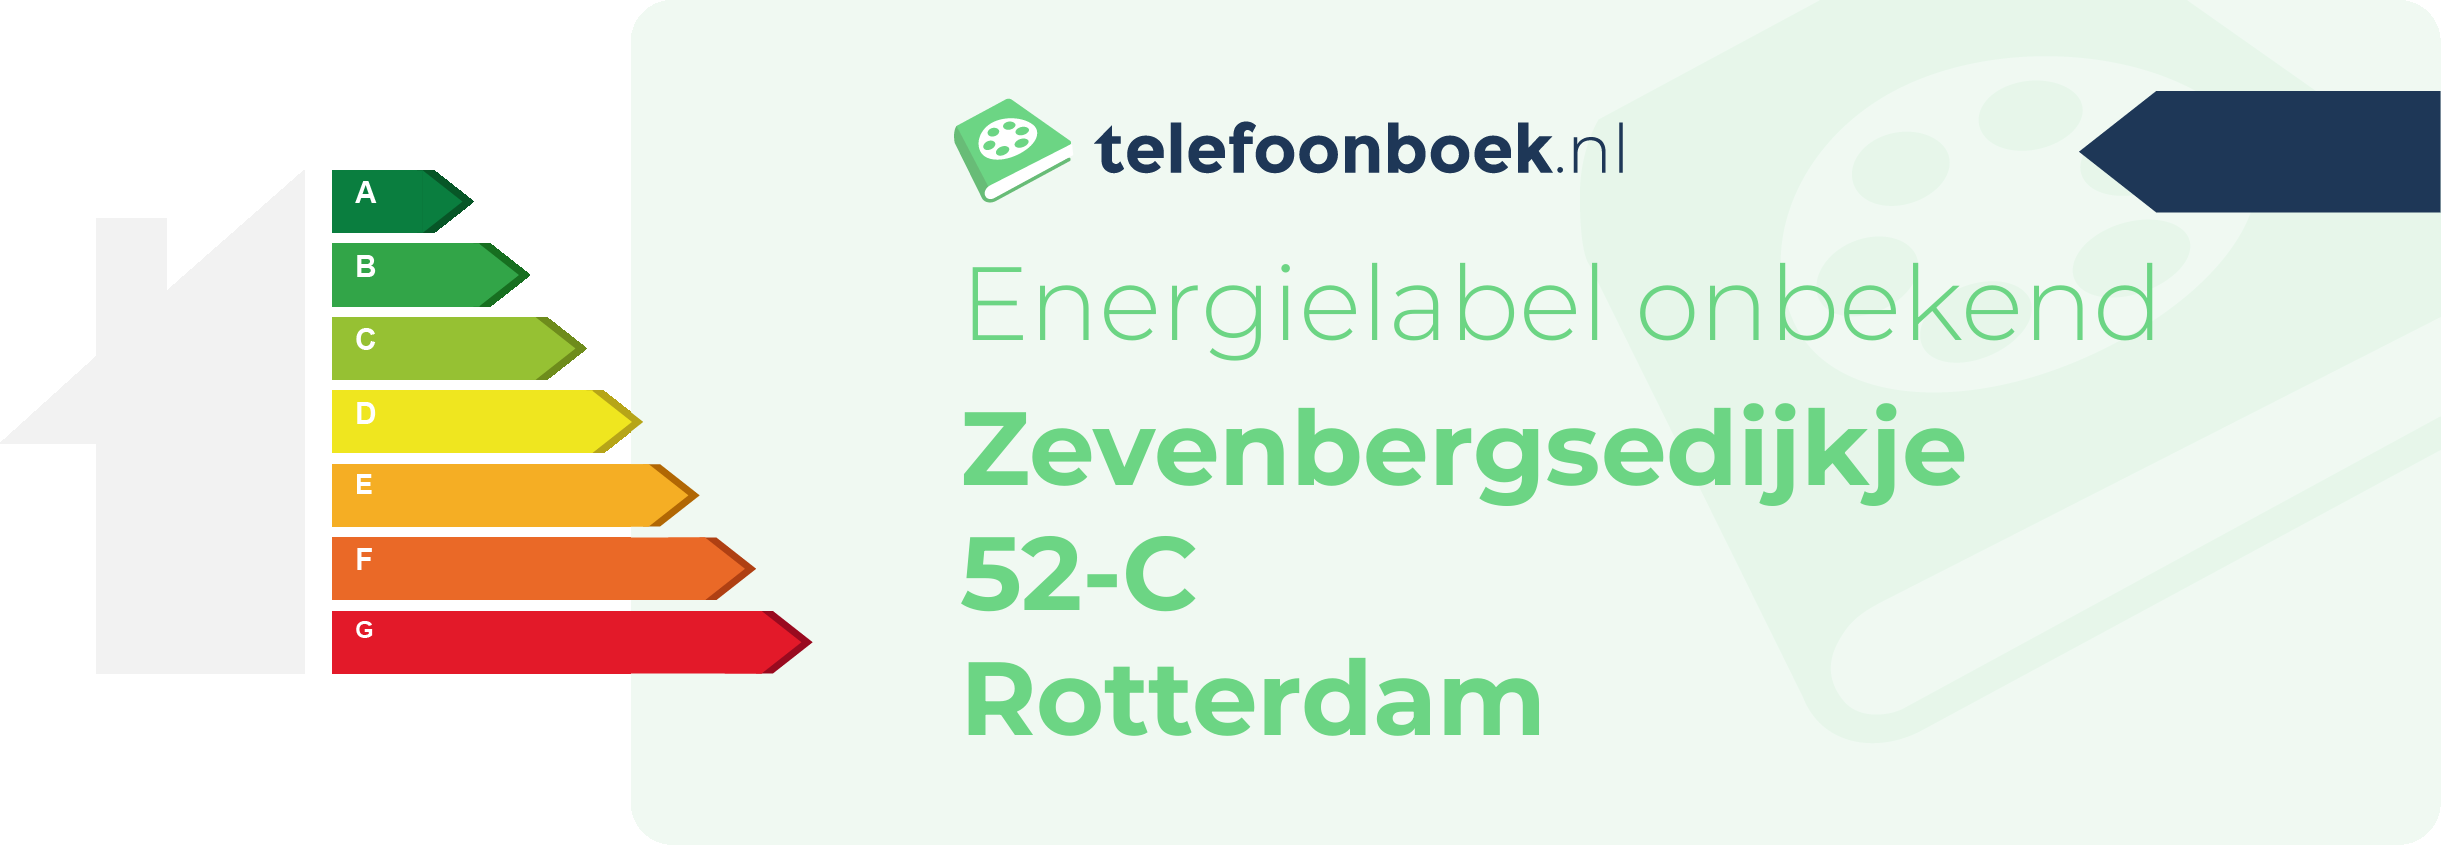 Energielabel Zevenbergsedijkje 52-C Rotterdam